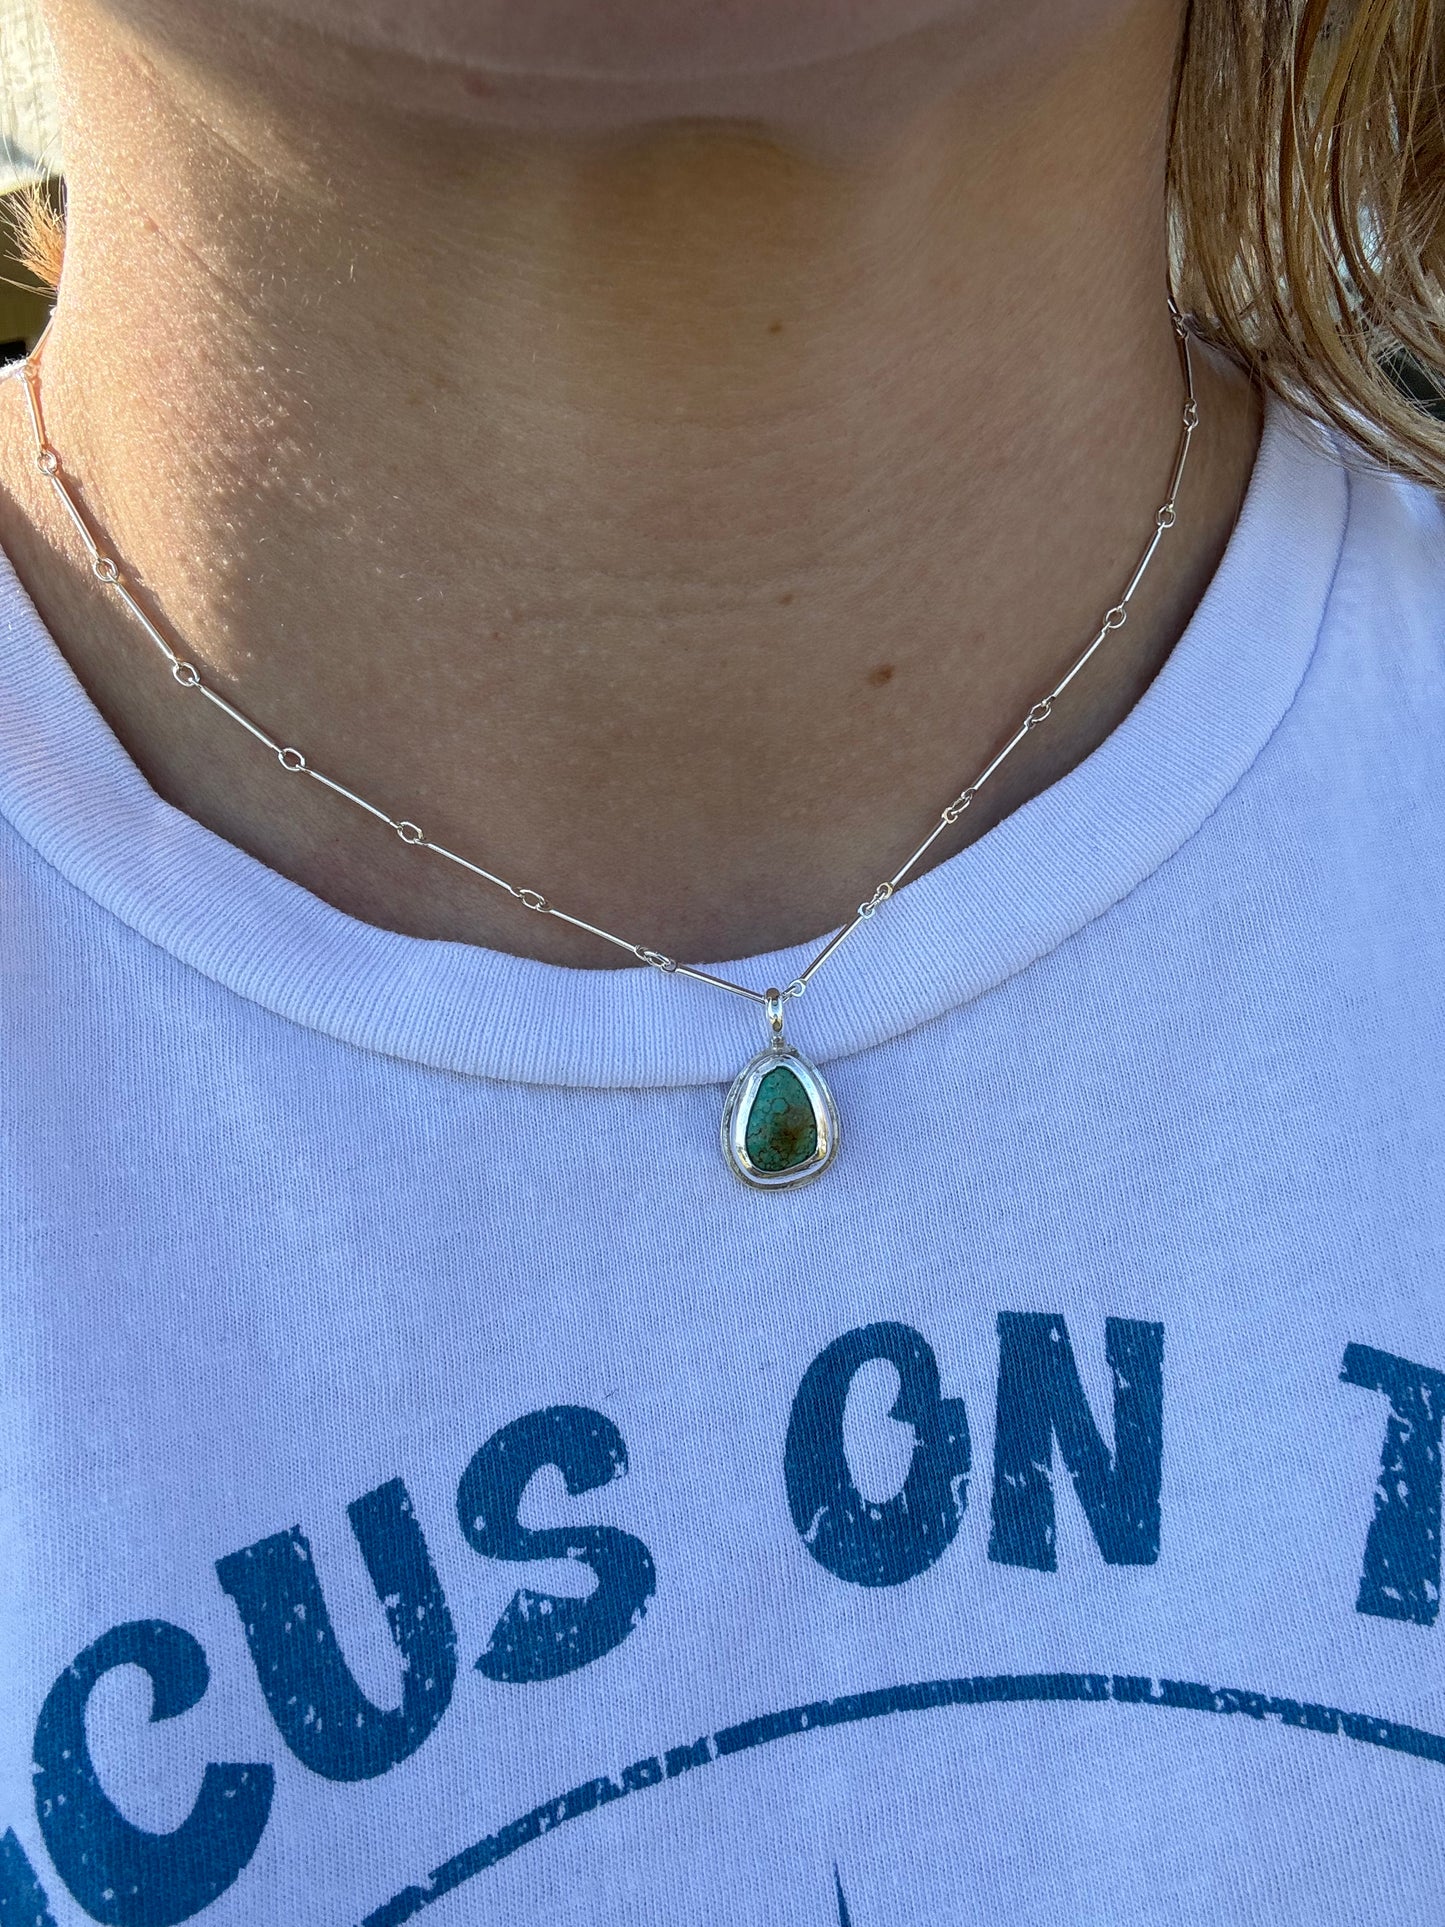 Mini turquoise pendant